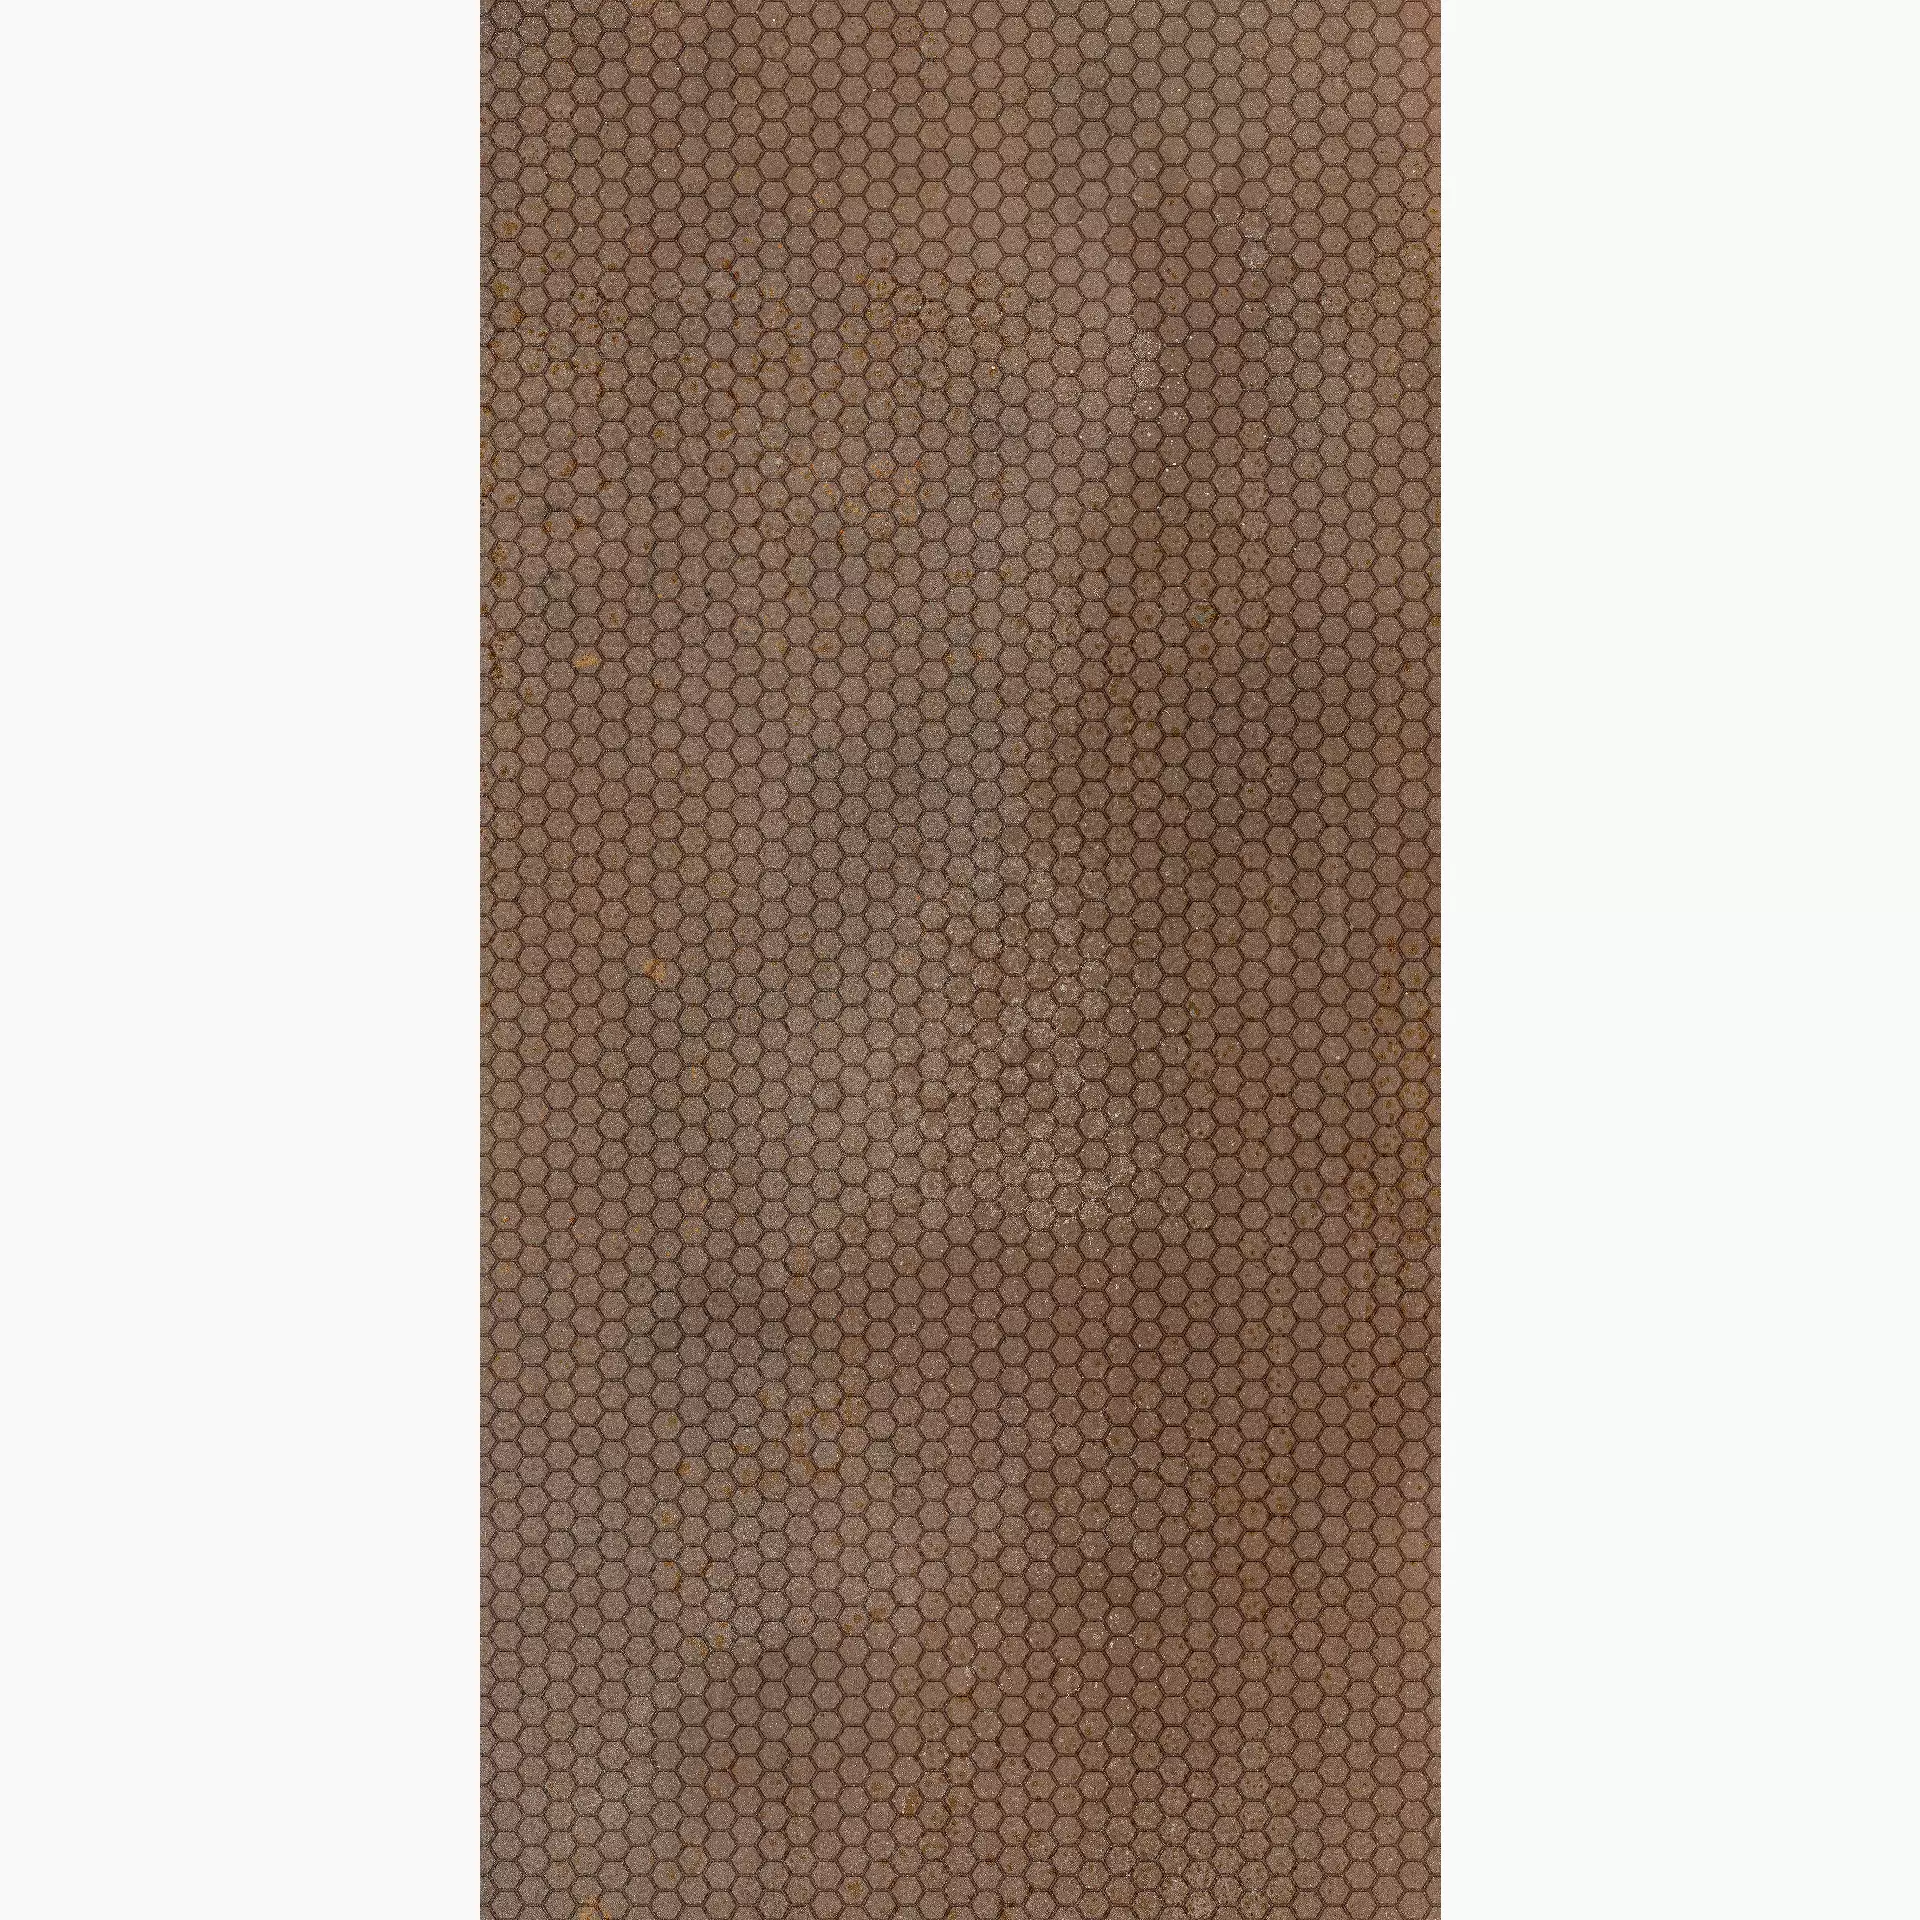 Panaria Zero.3 Blade Rust Antibacterial - Naturale Decor Hive PZ9BL80 50x100cm rectified 3,5mm